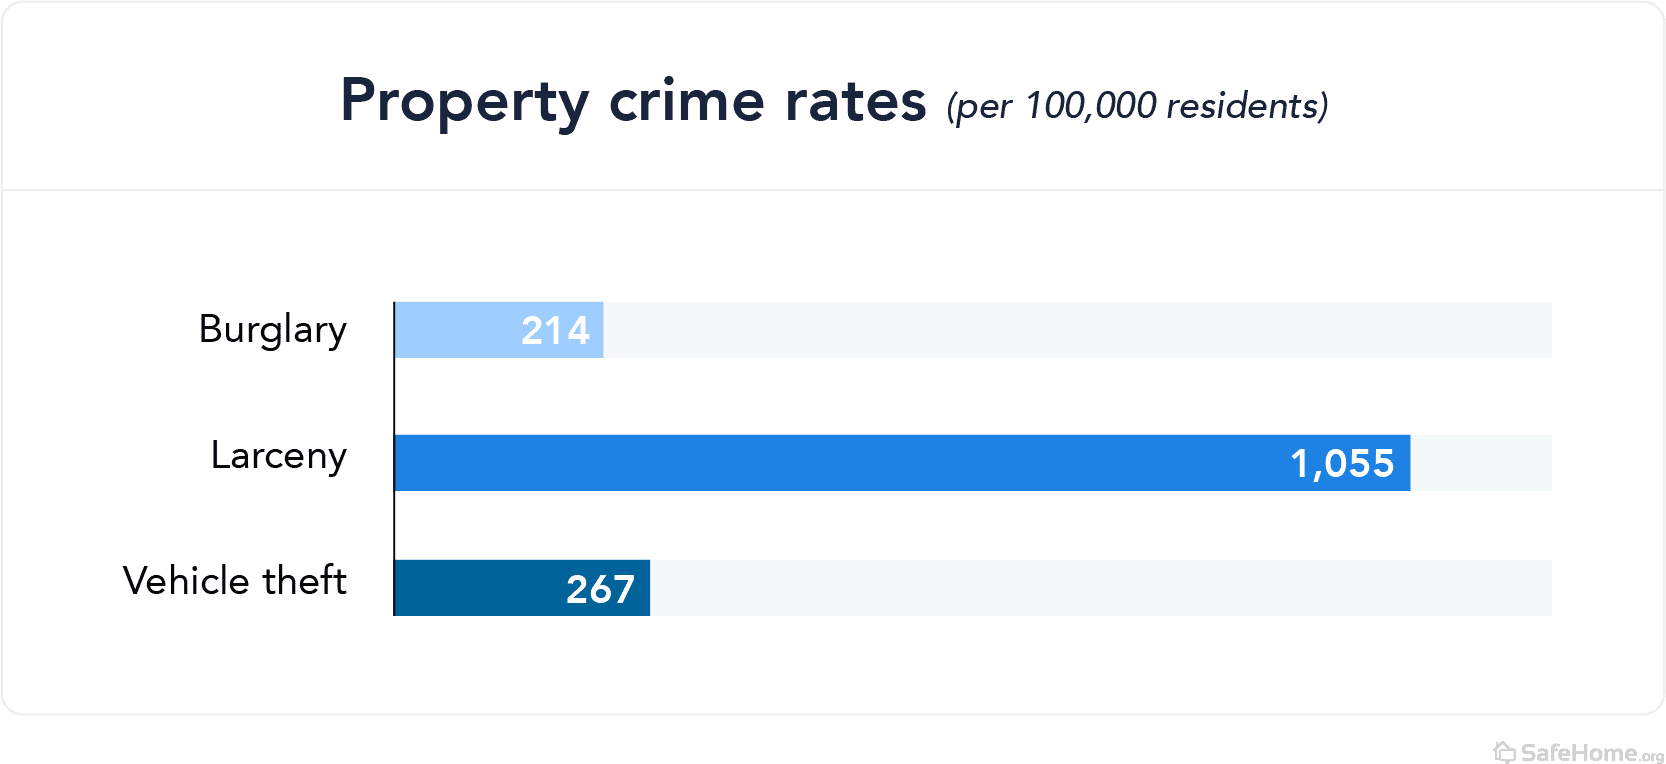 Michigan property crime rates